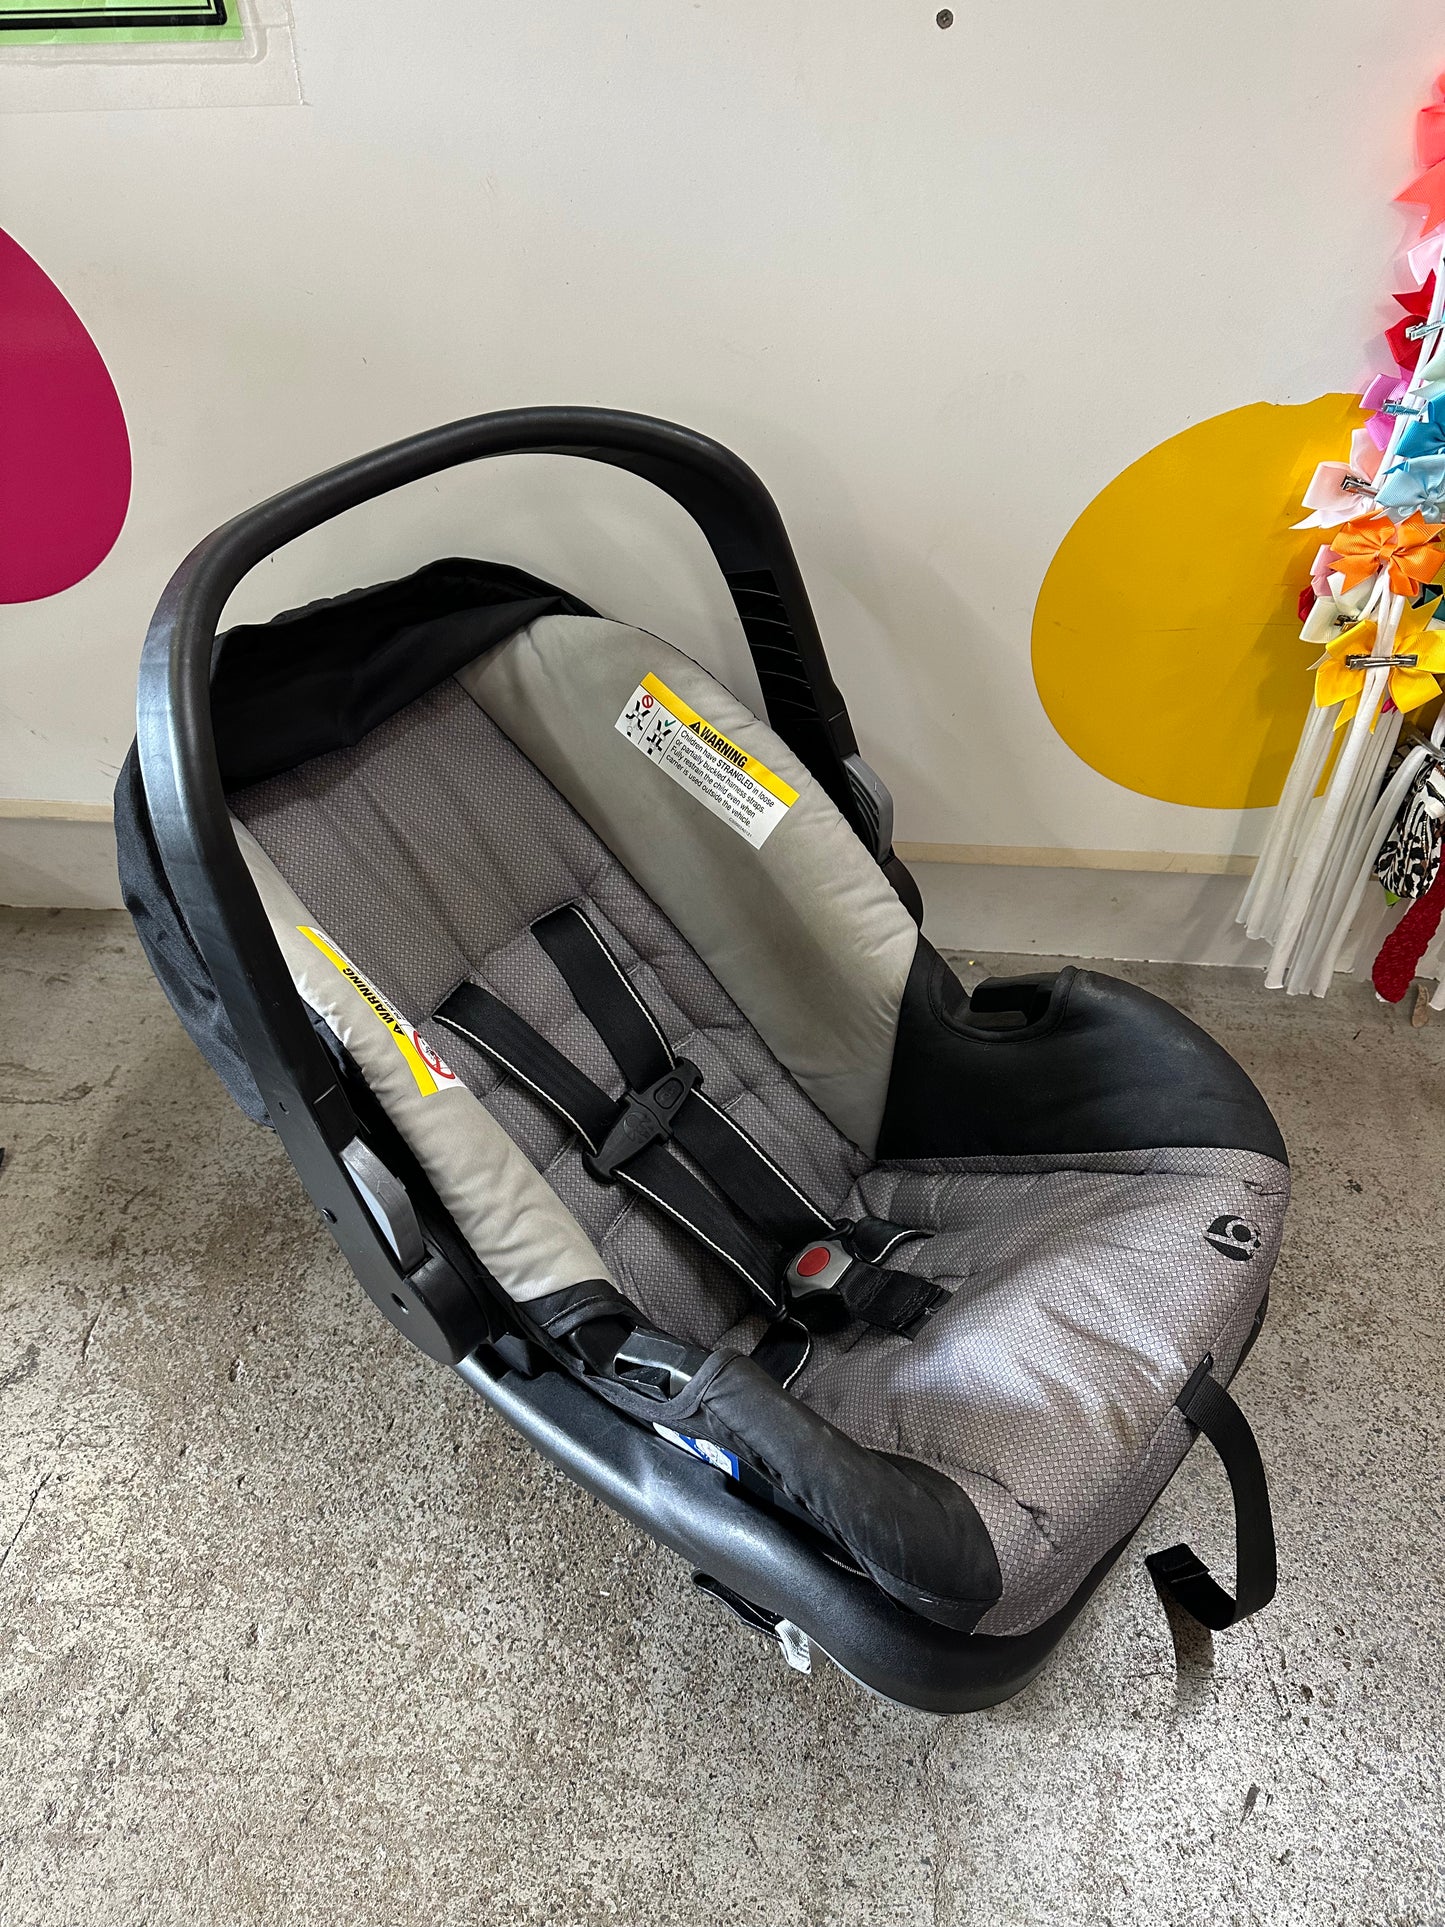 Baby Trend EZ Ride Stroller + Free Matching Car Seat